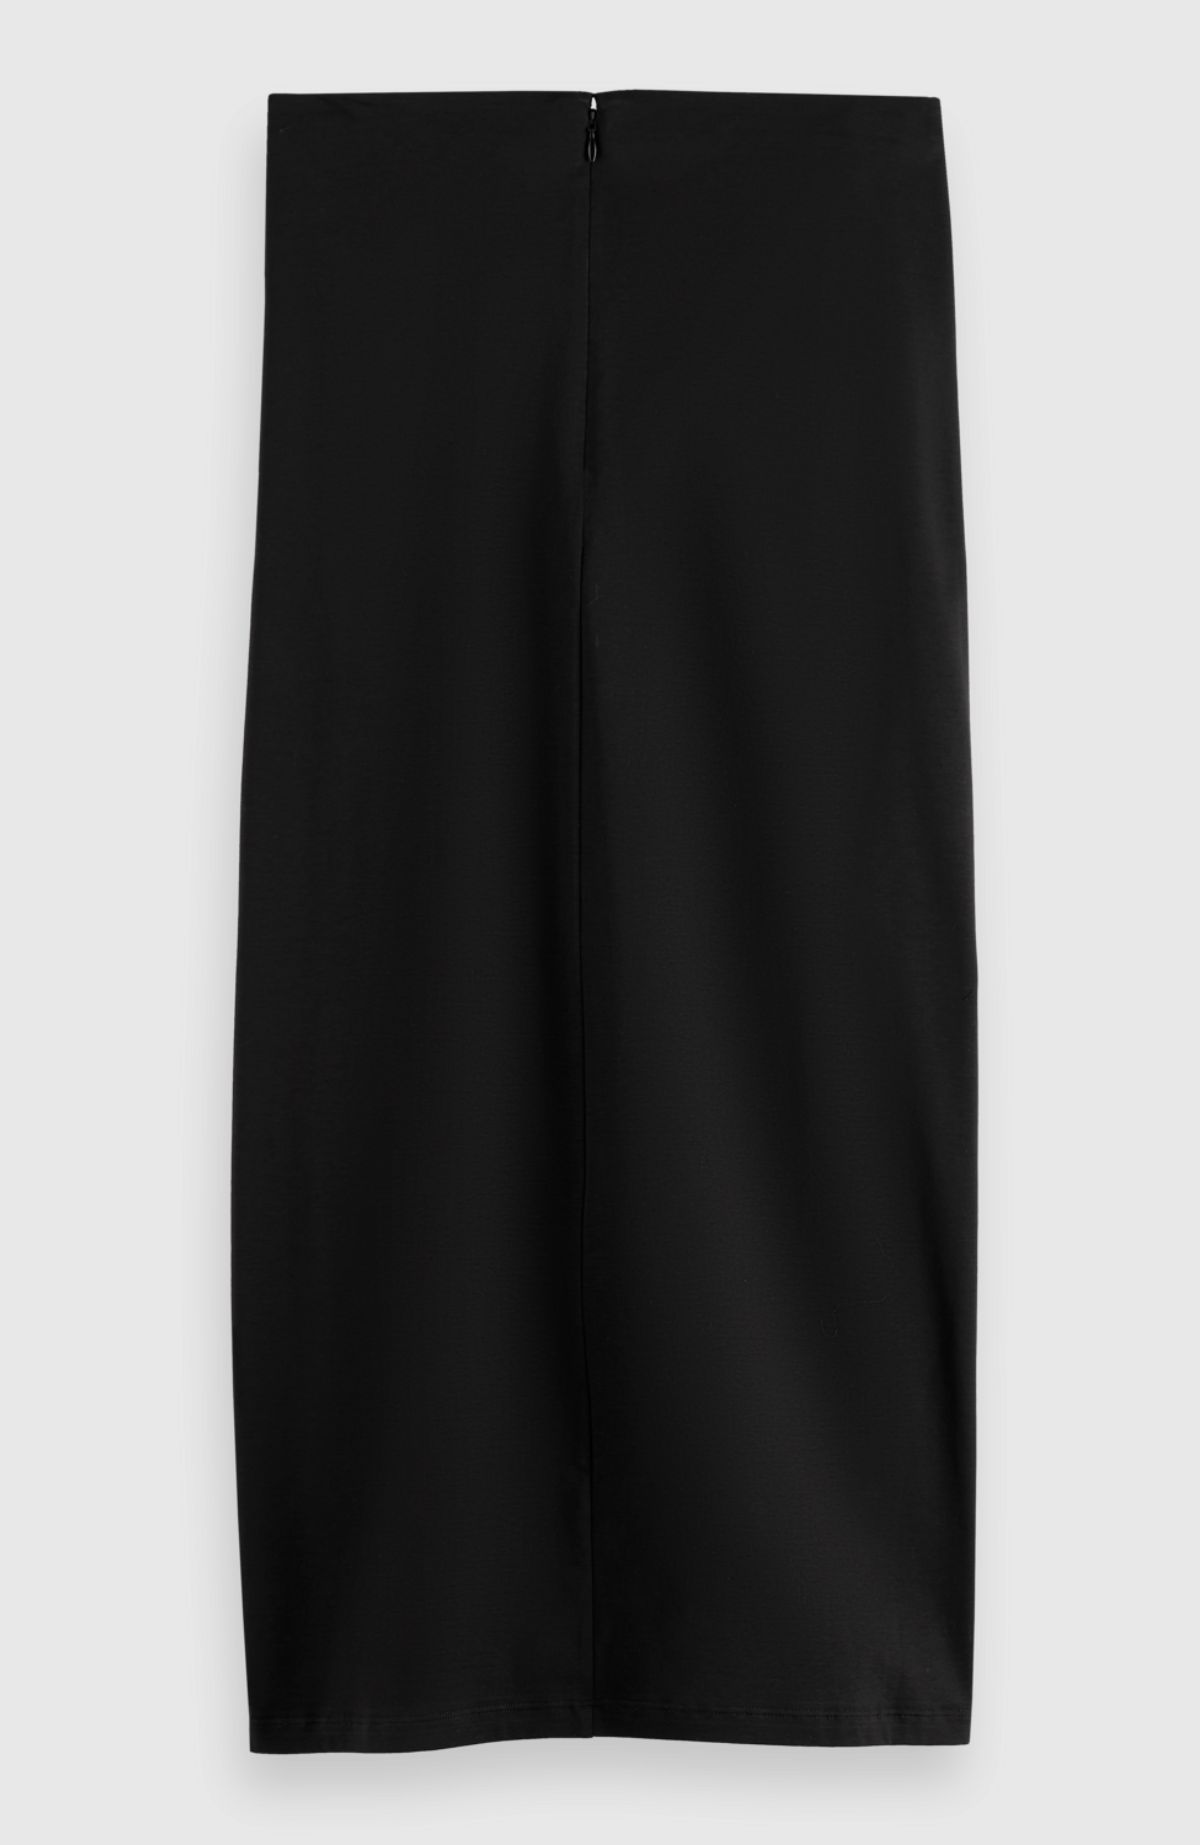 Skirt with drape detail